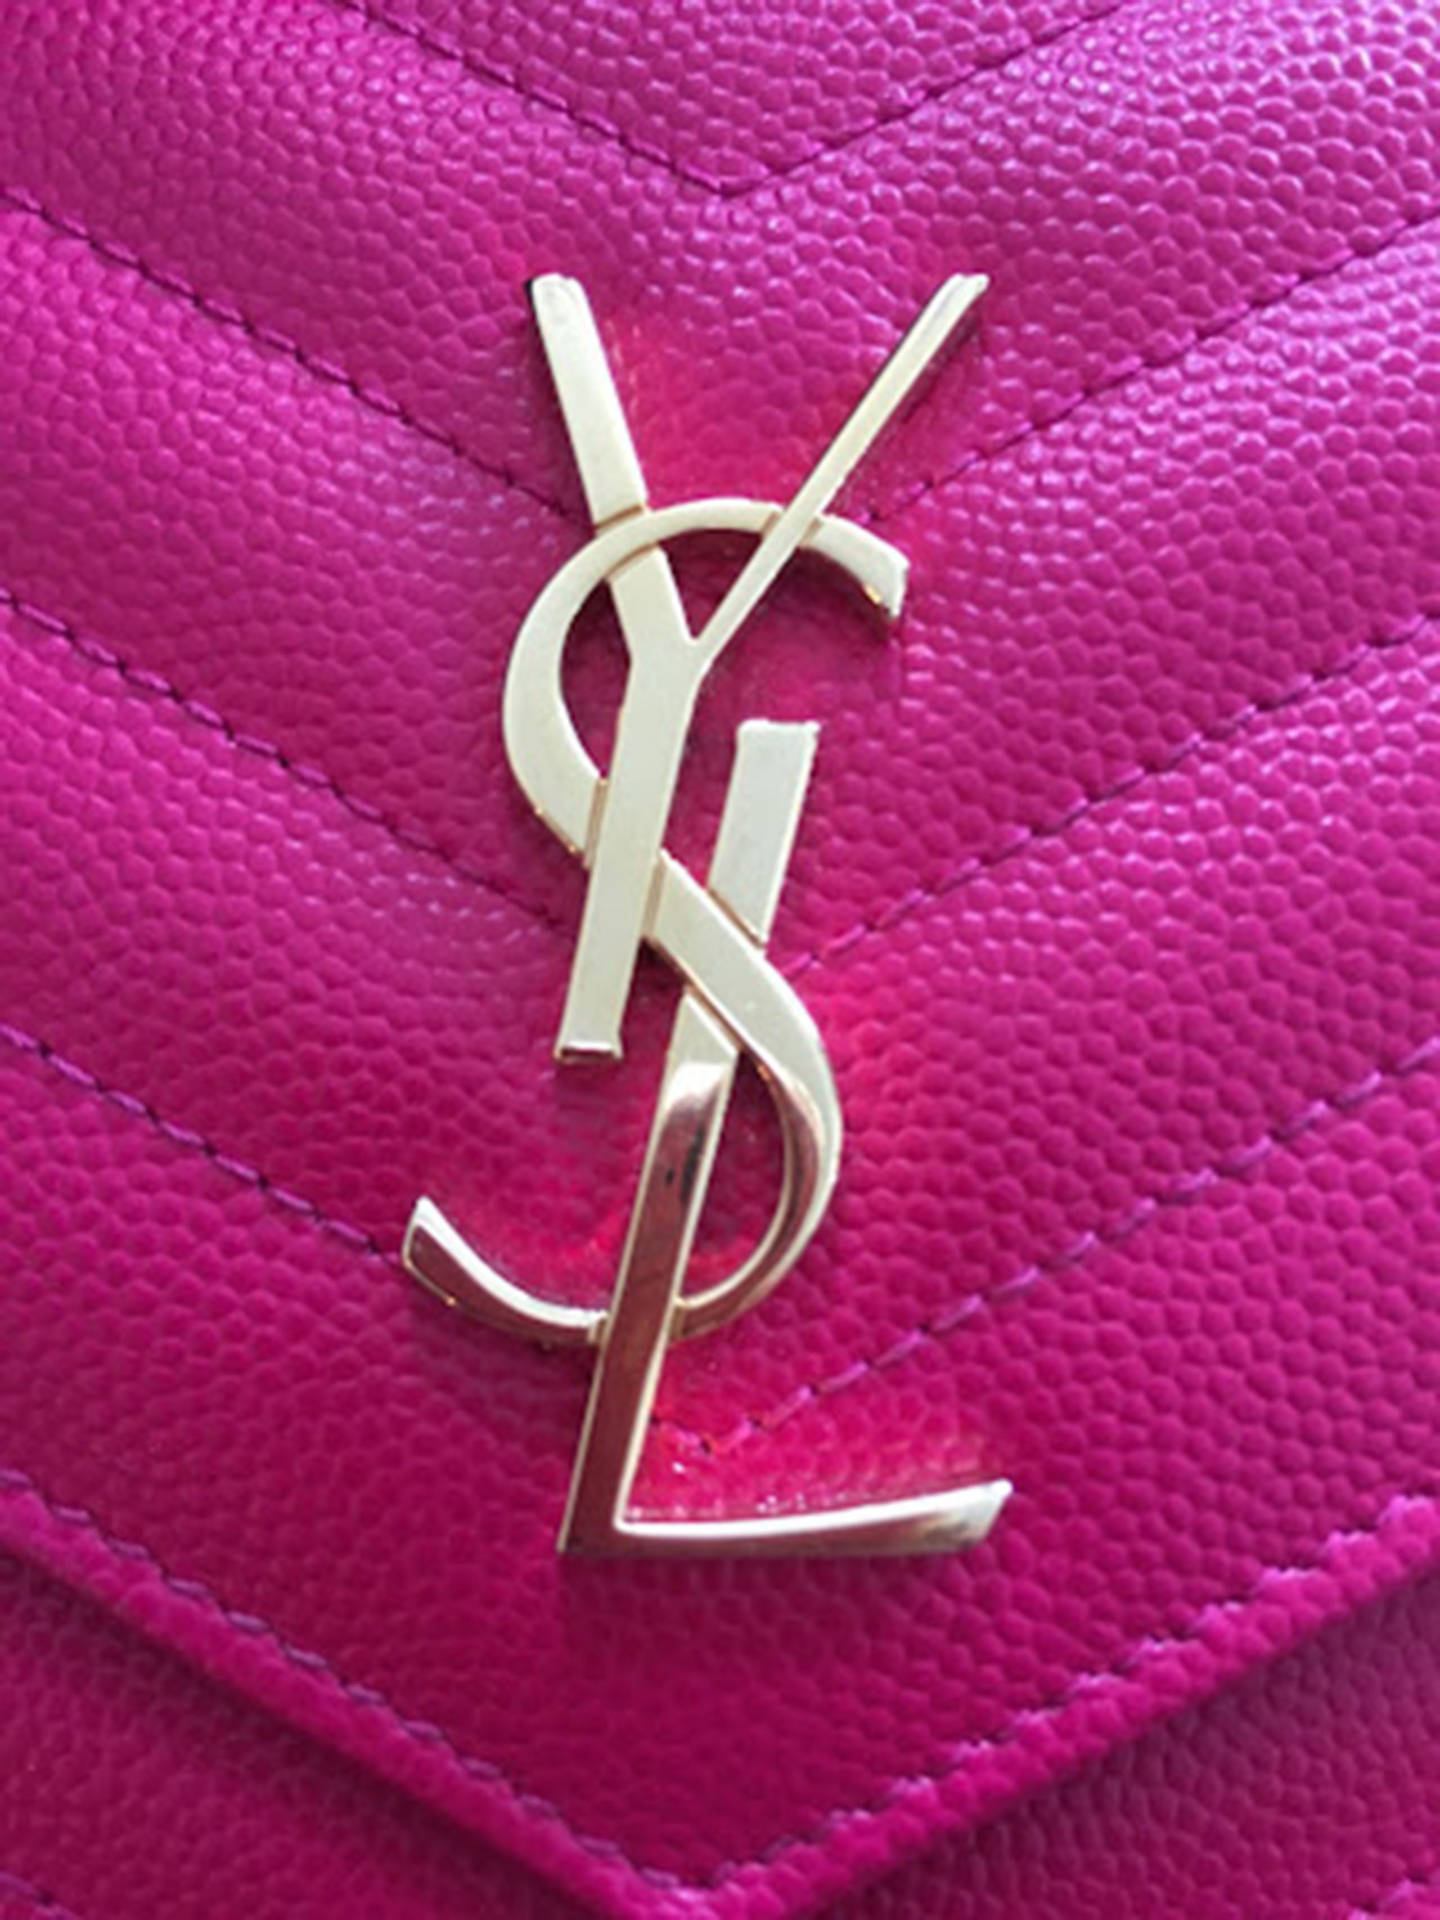 Ysl Logo In Pink Purse Background